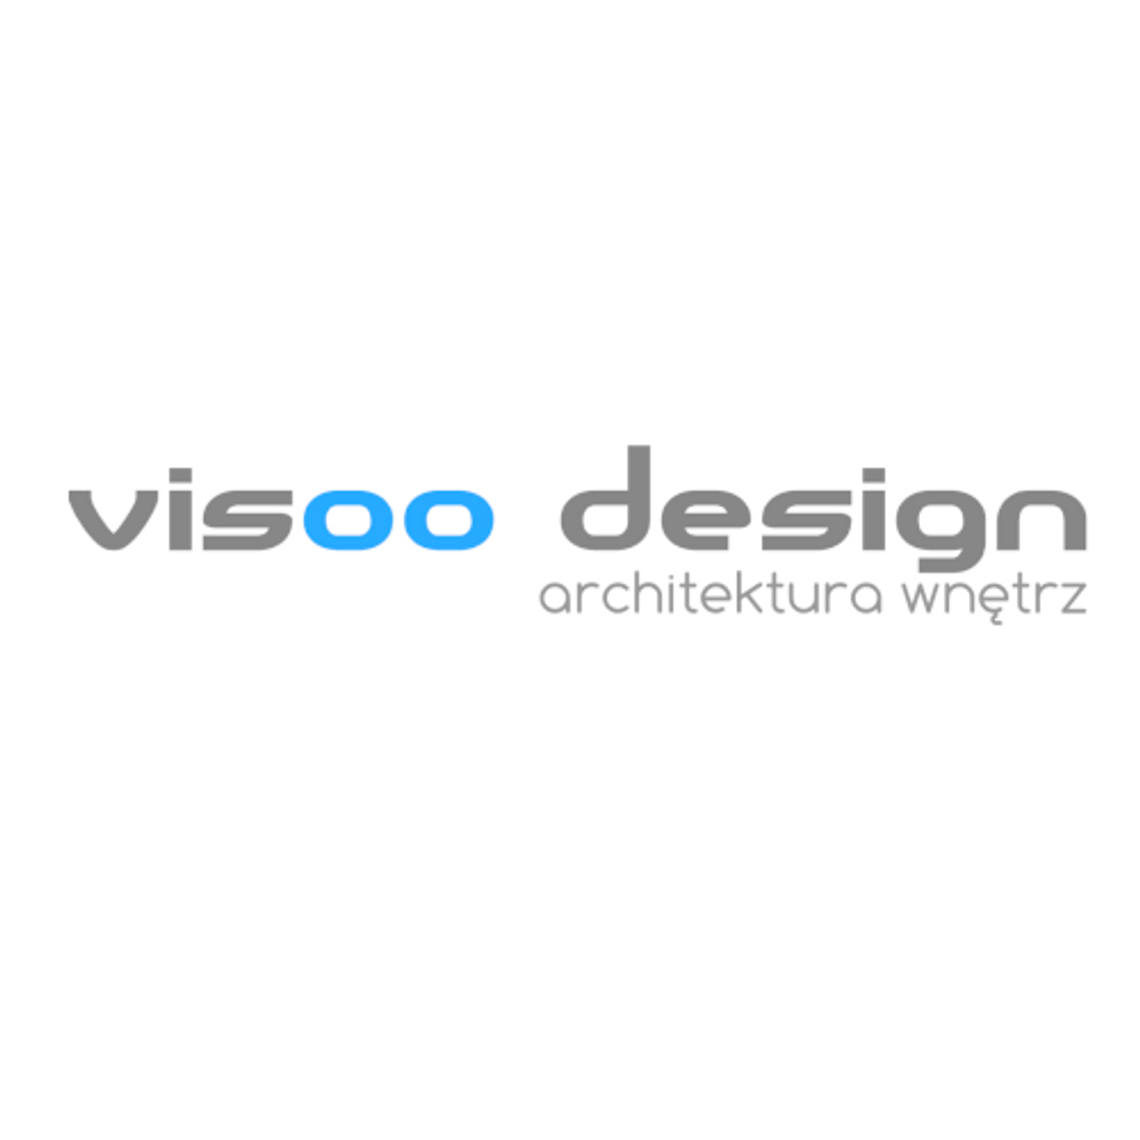 Visoo Design